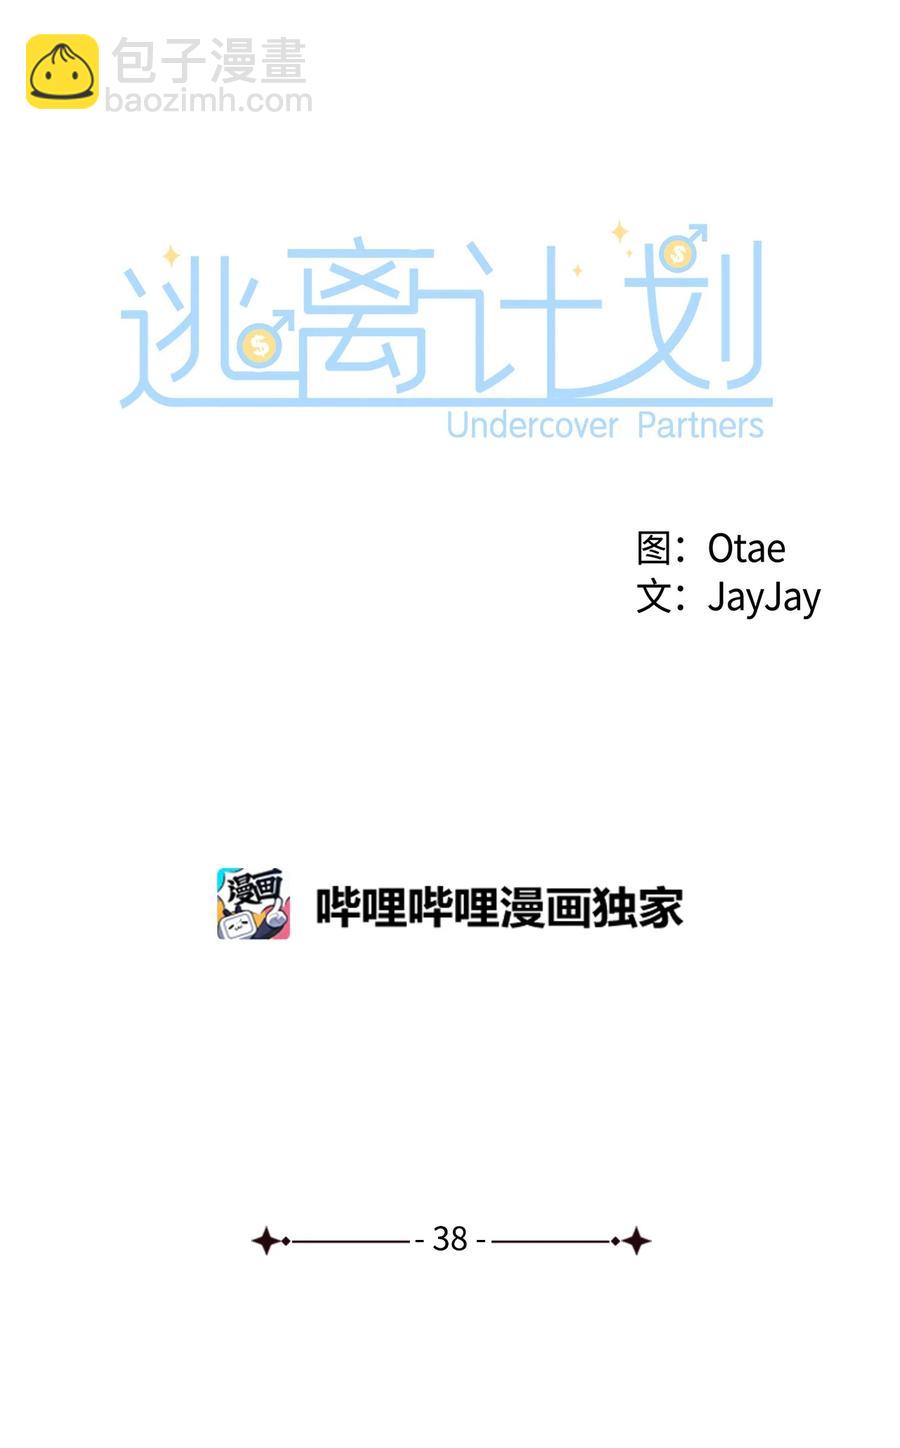 逃離計劃-Undercover Partners - 38 參加活動(1/2) - 3